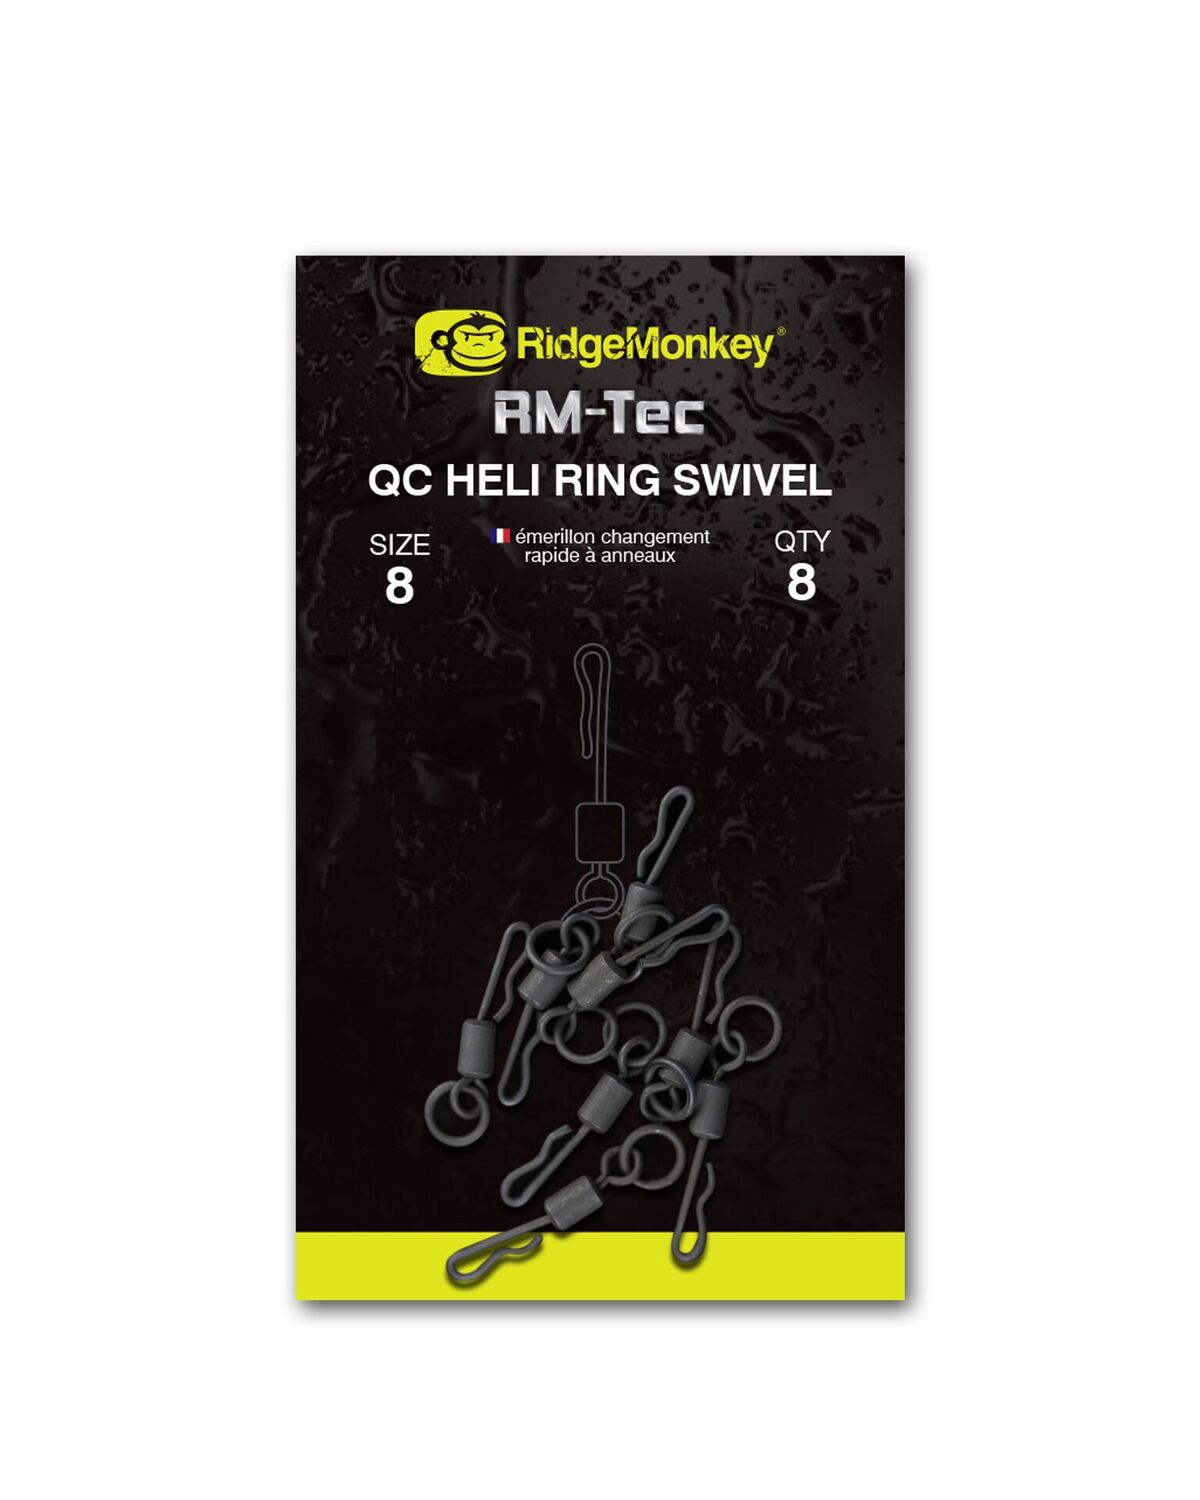 RidgeMonkey RM-Tec QC Heli Ring Swivel karikás gyorskapcsos forgó